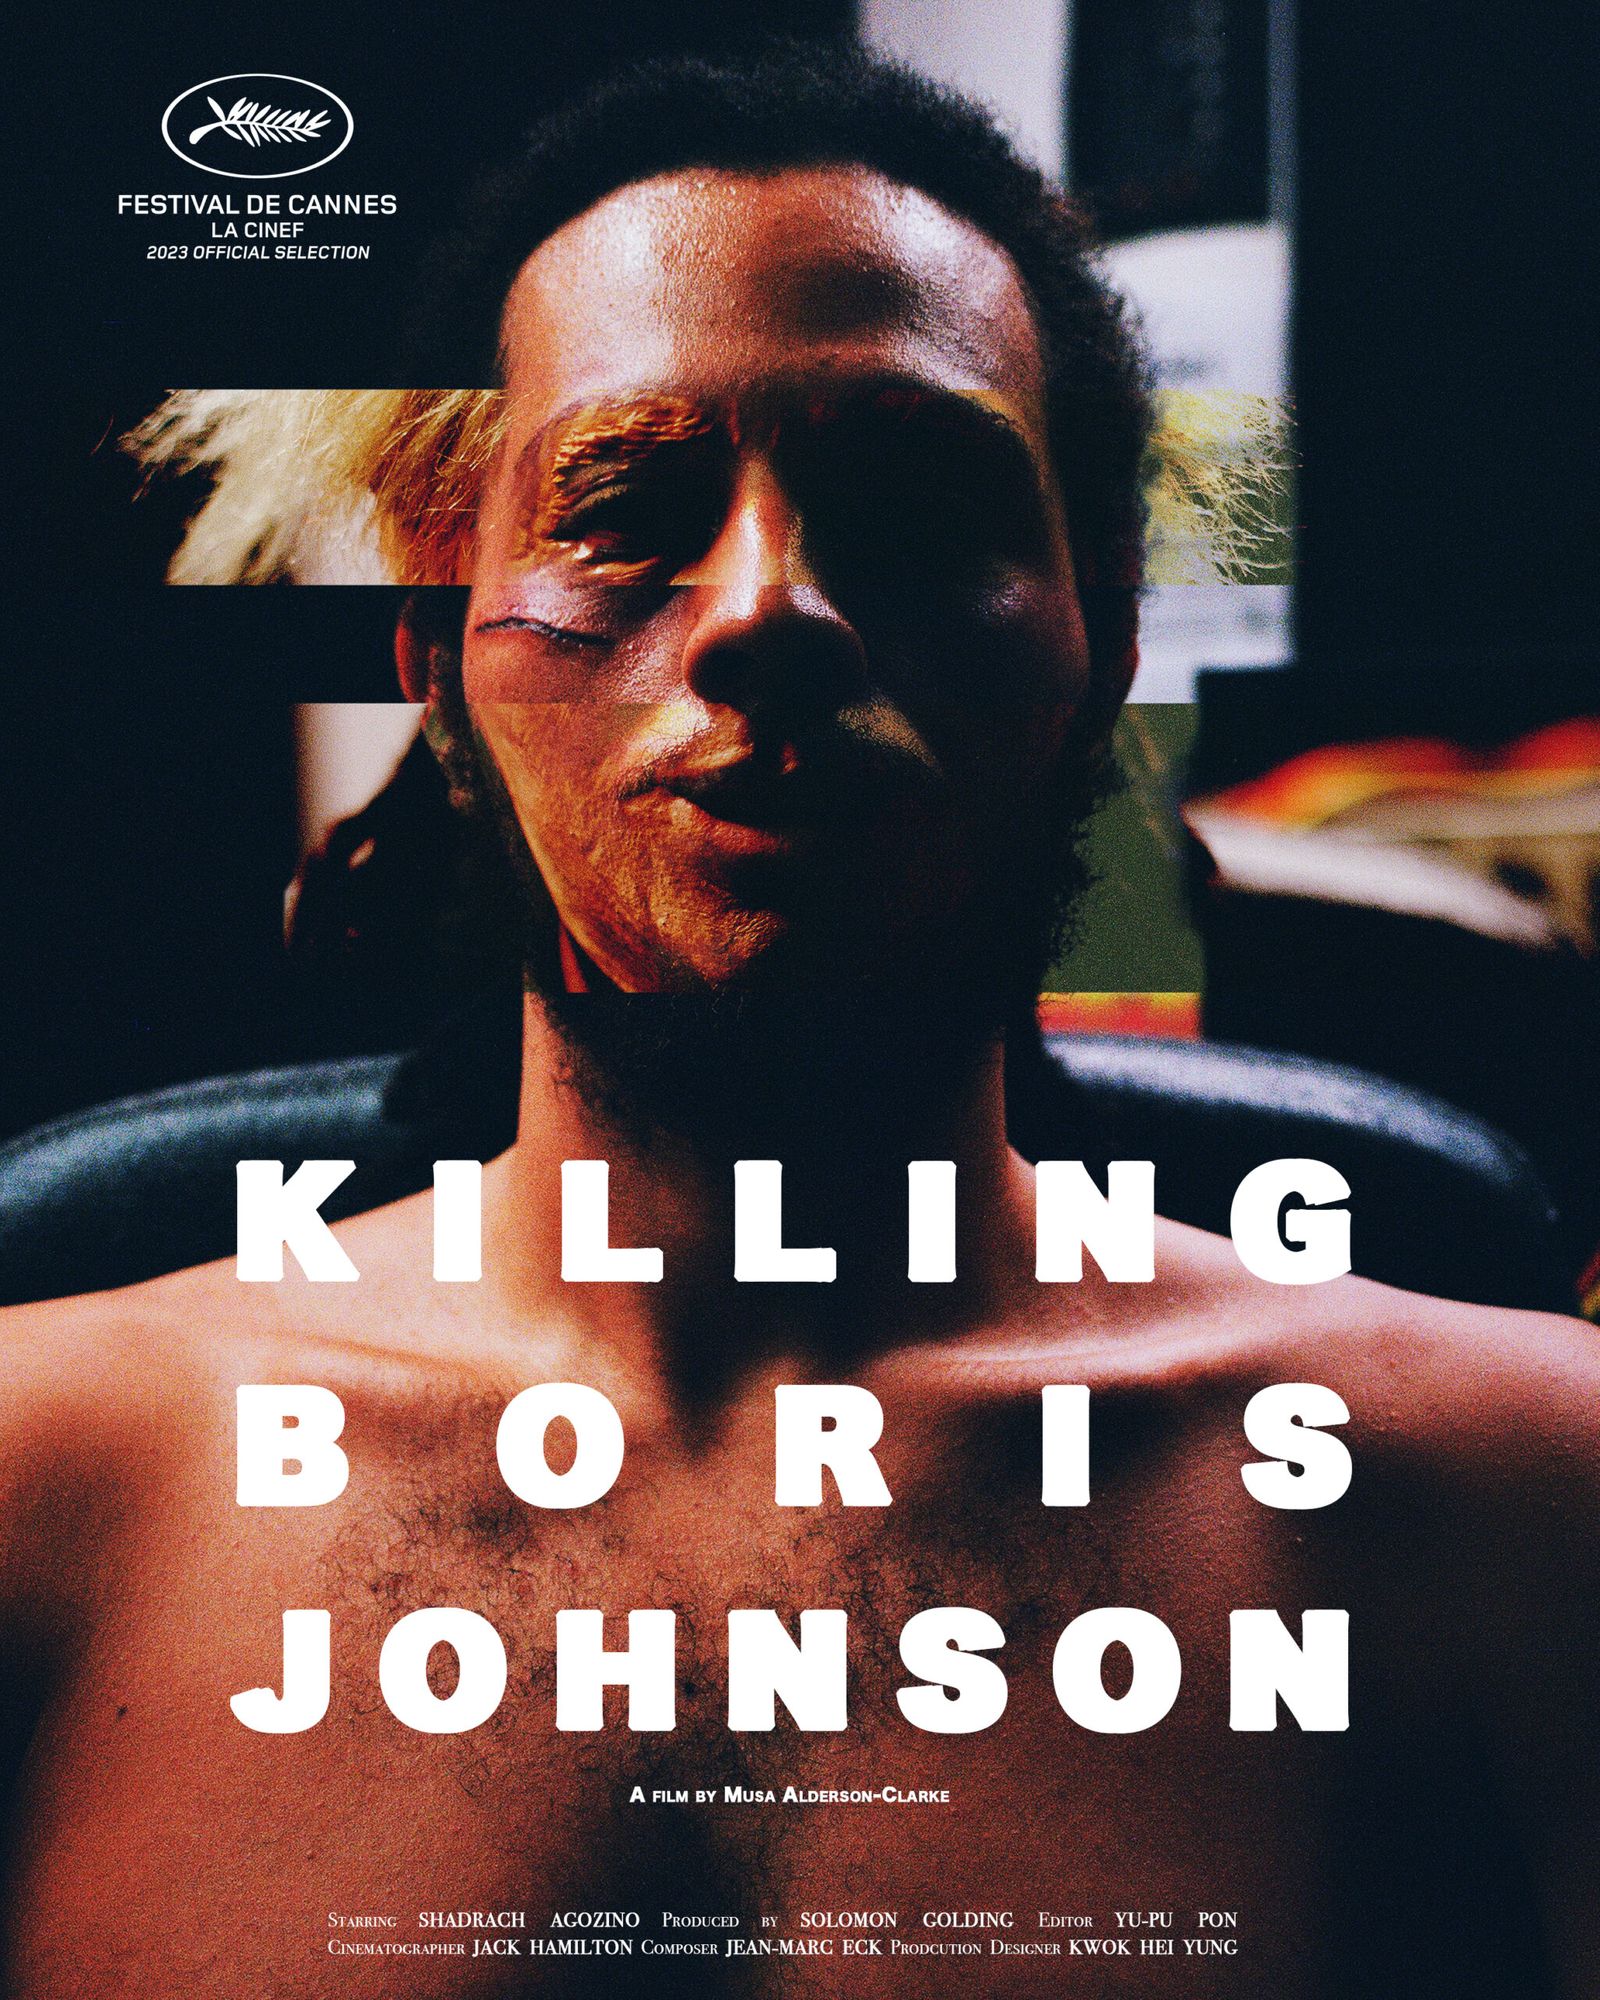 KILLING BORIS JOHNSON